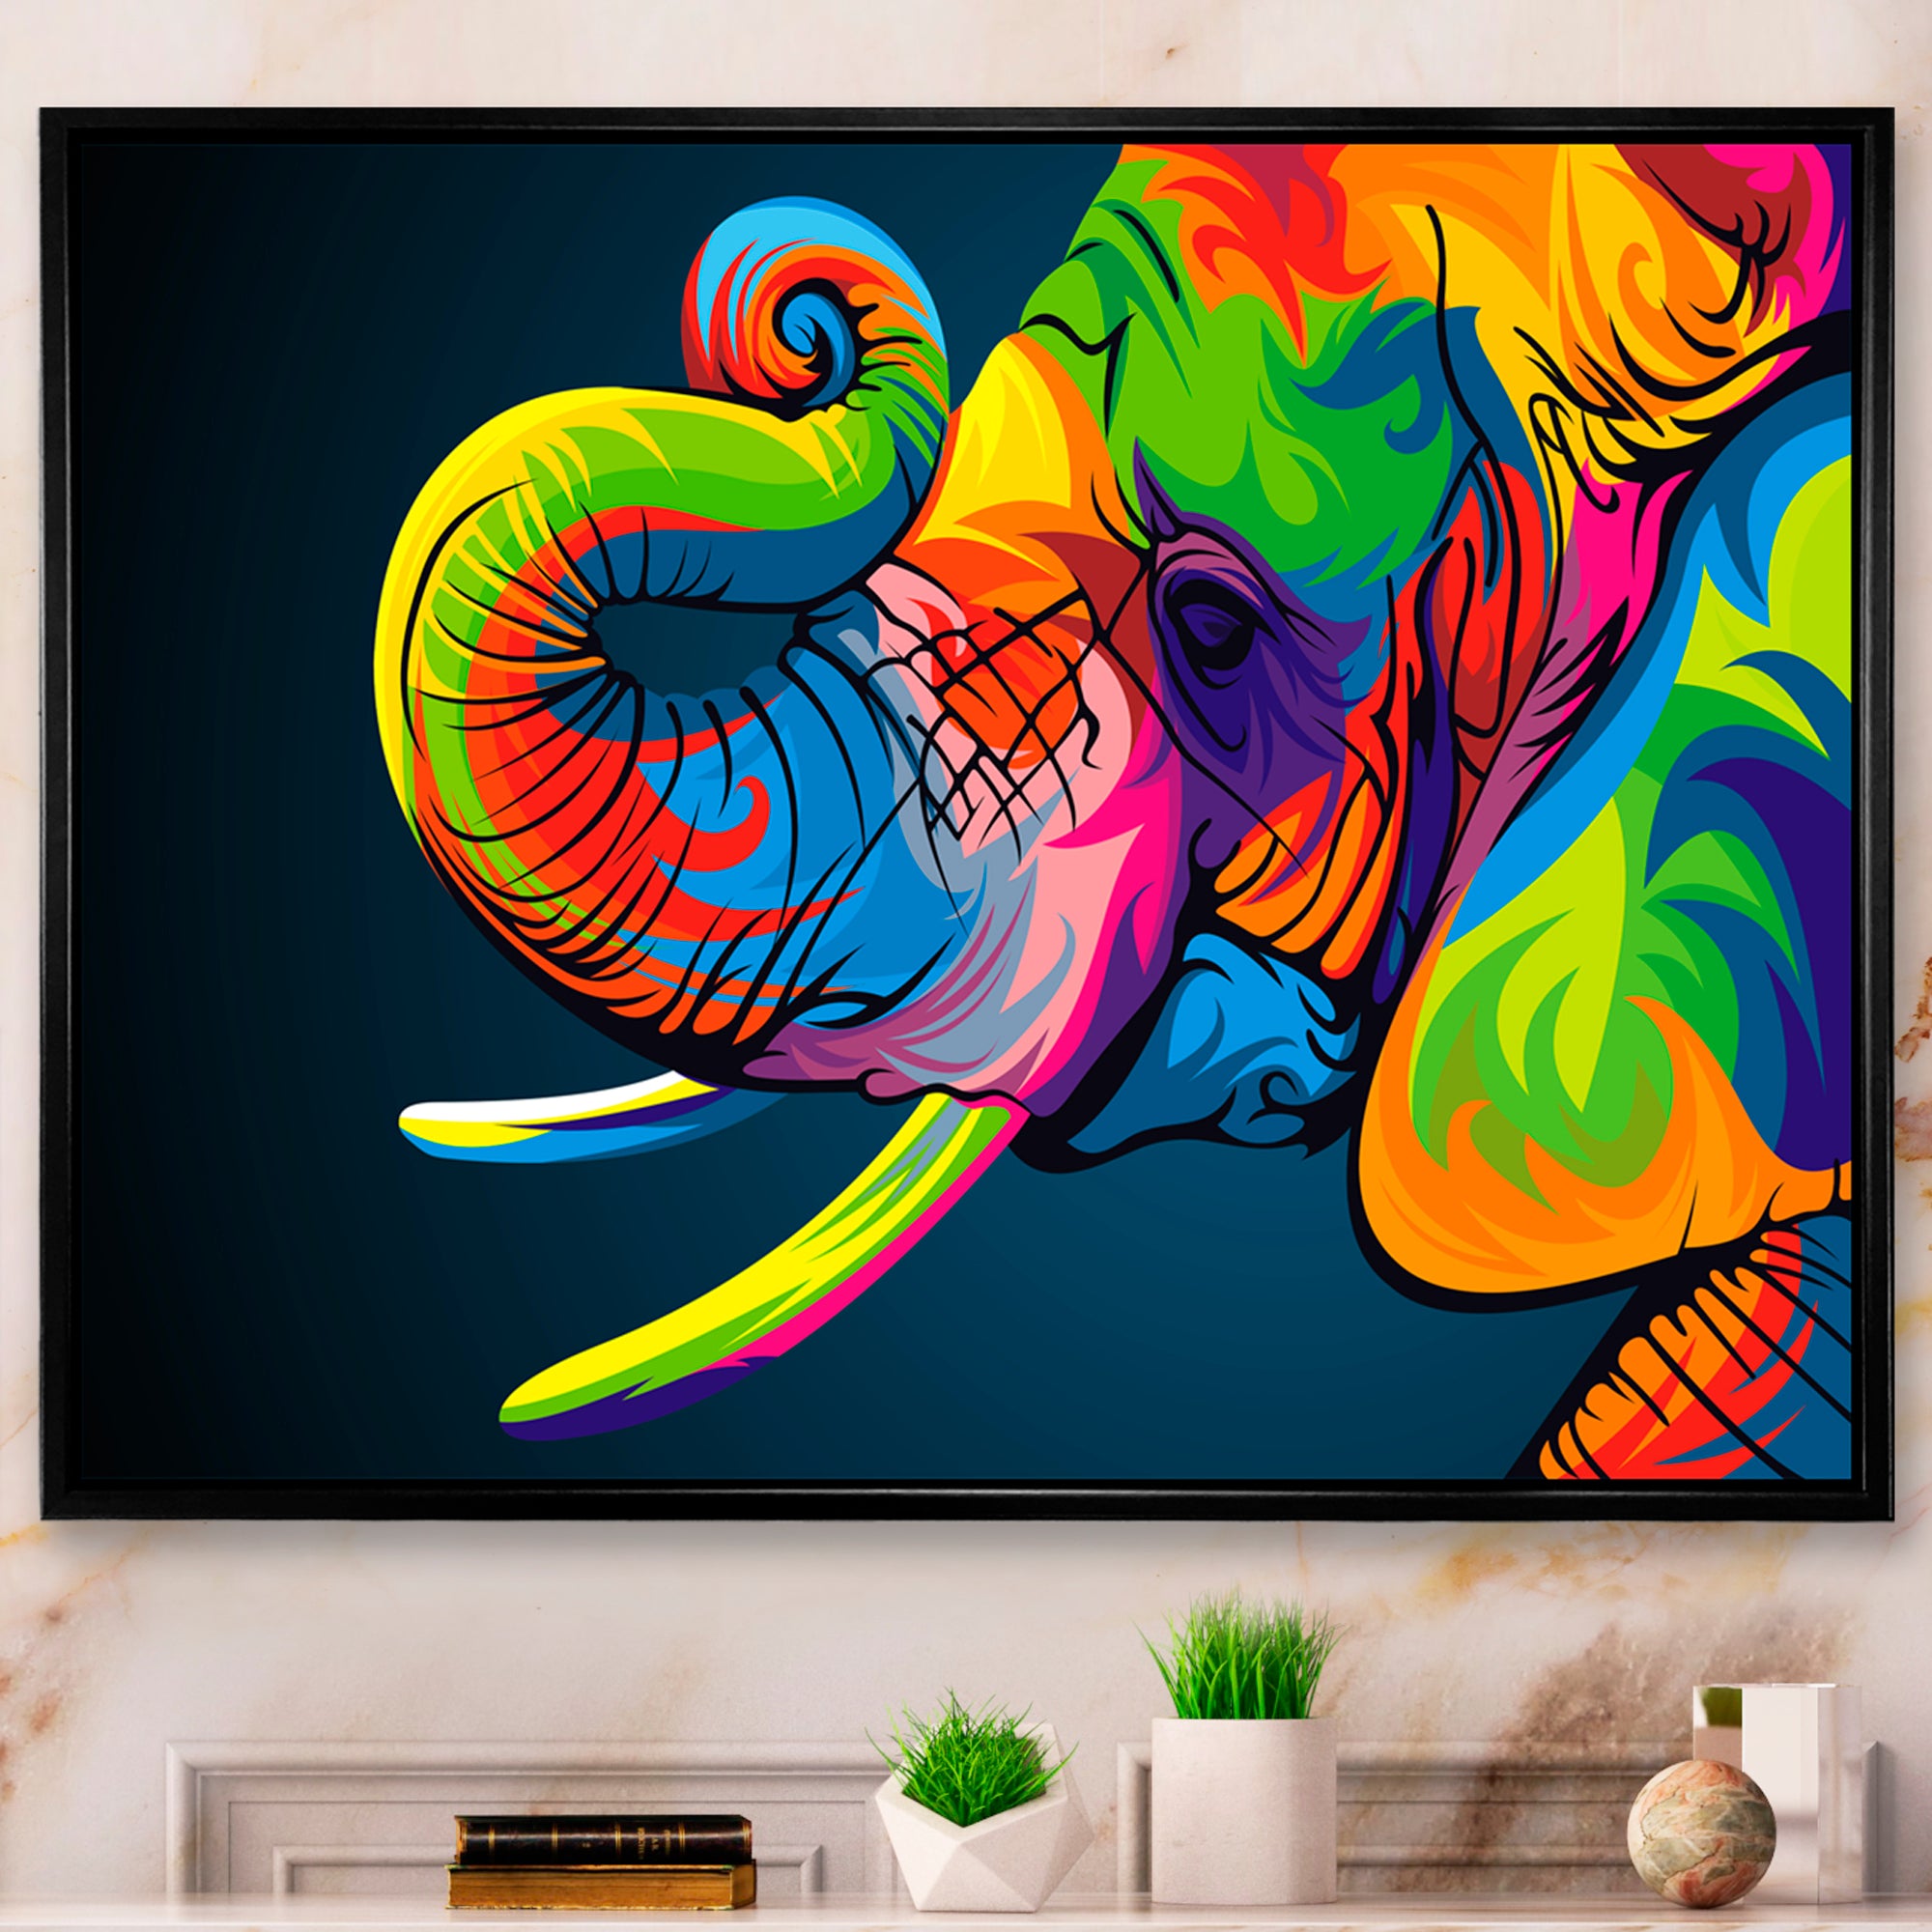 The Happy Rainbow Elephant